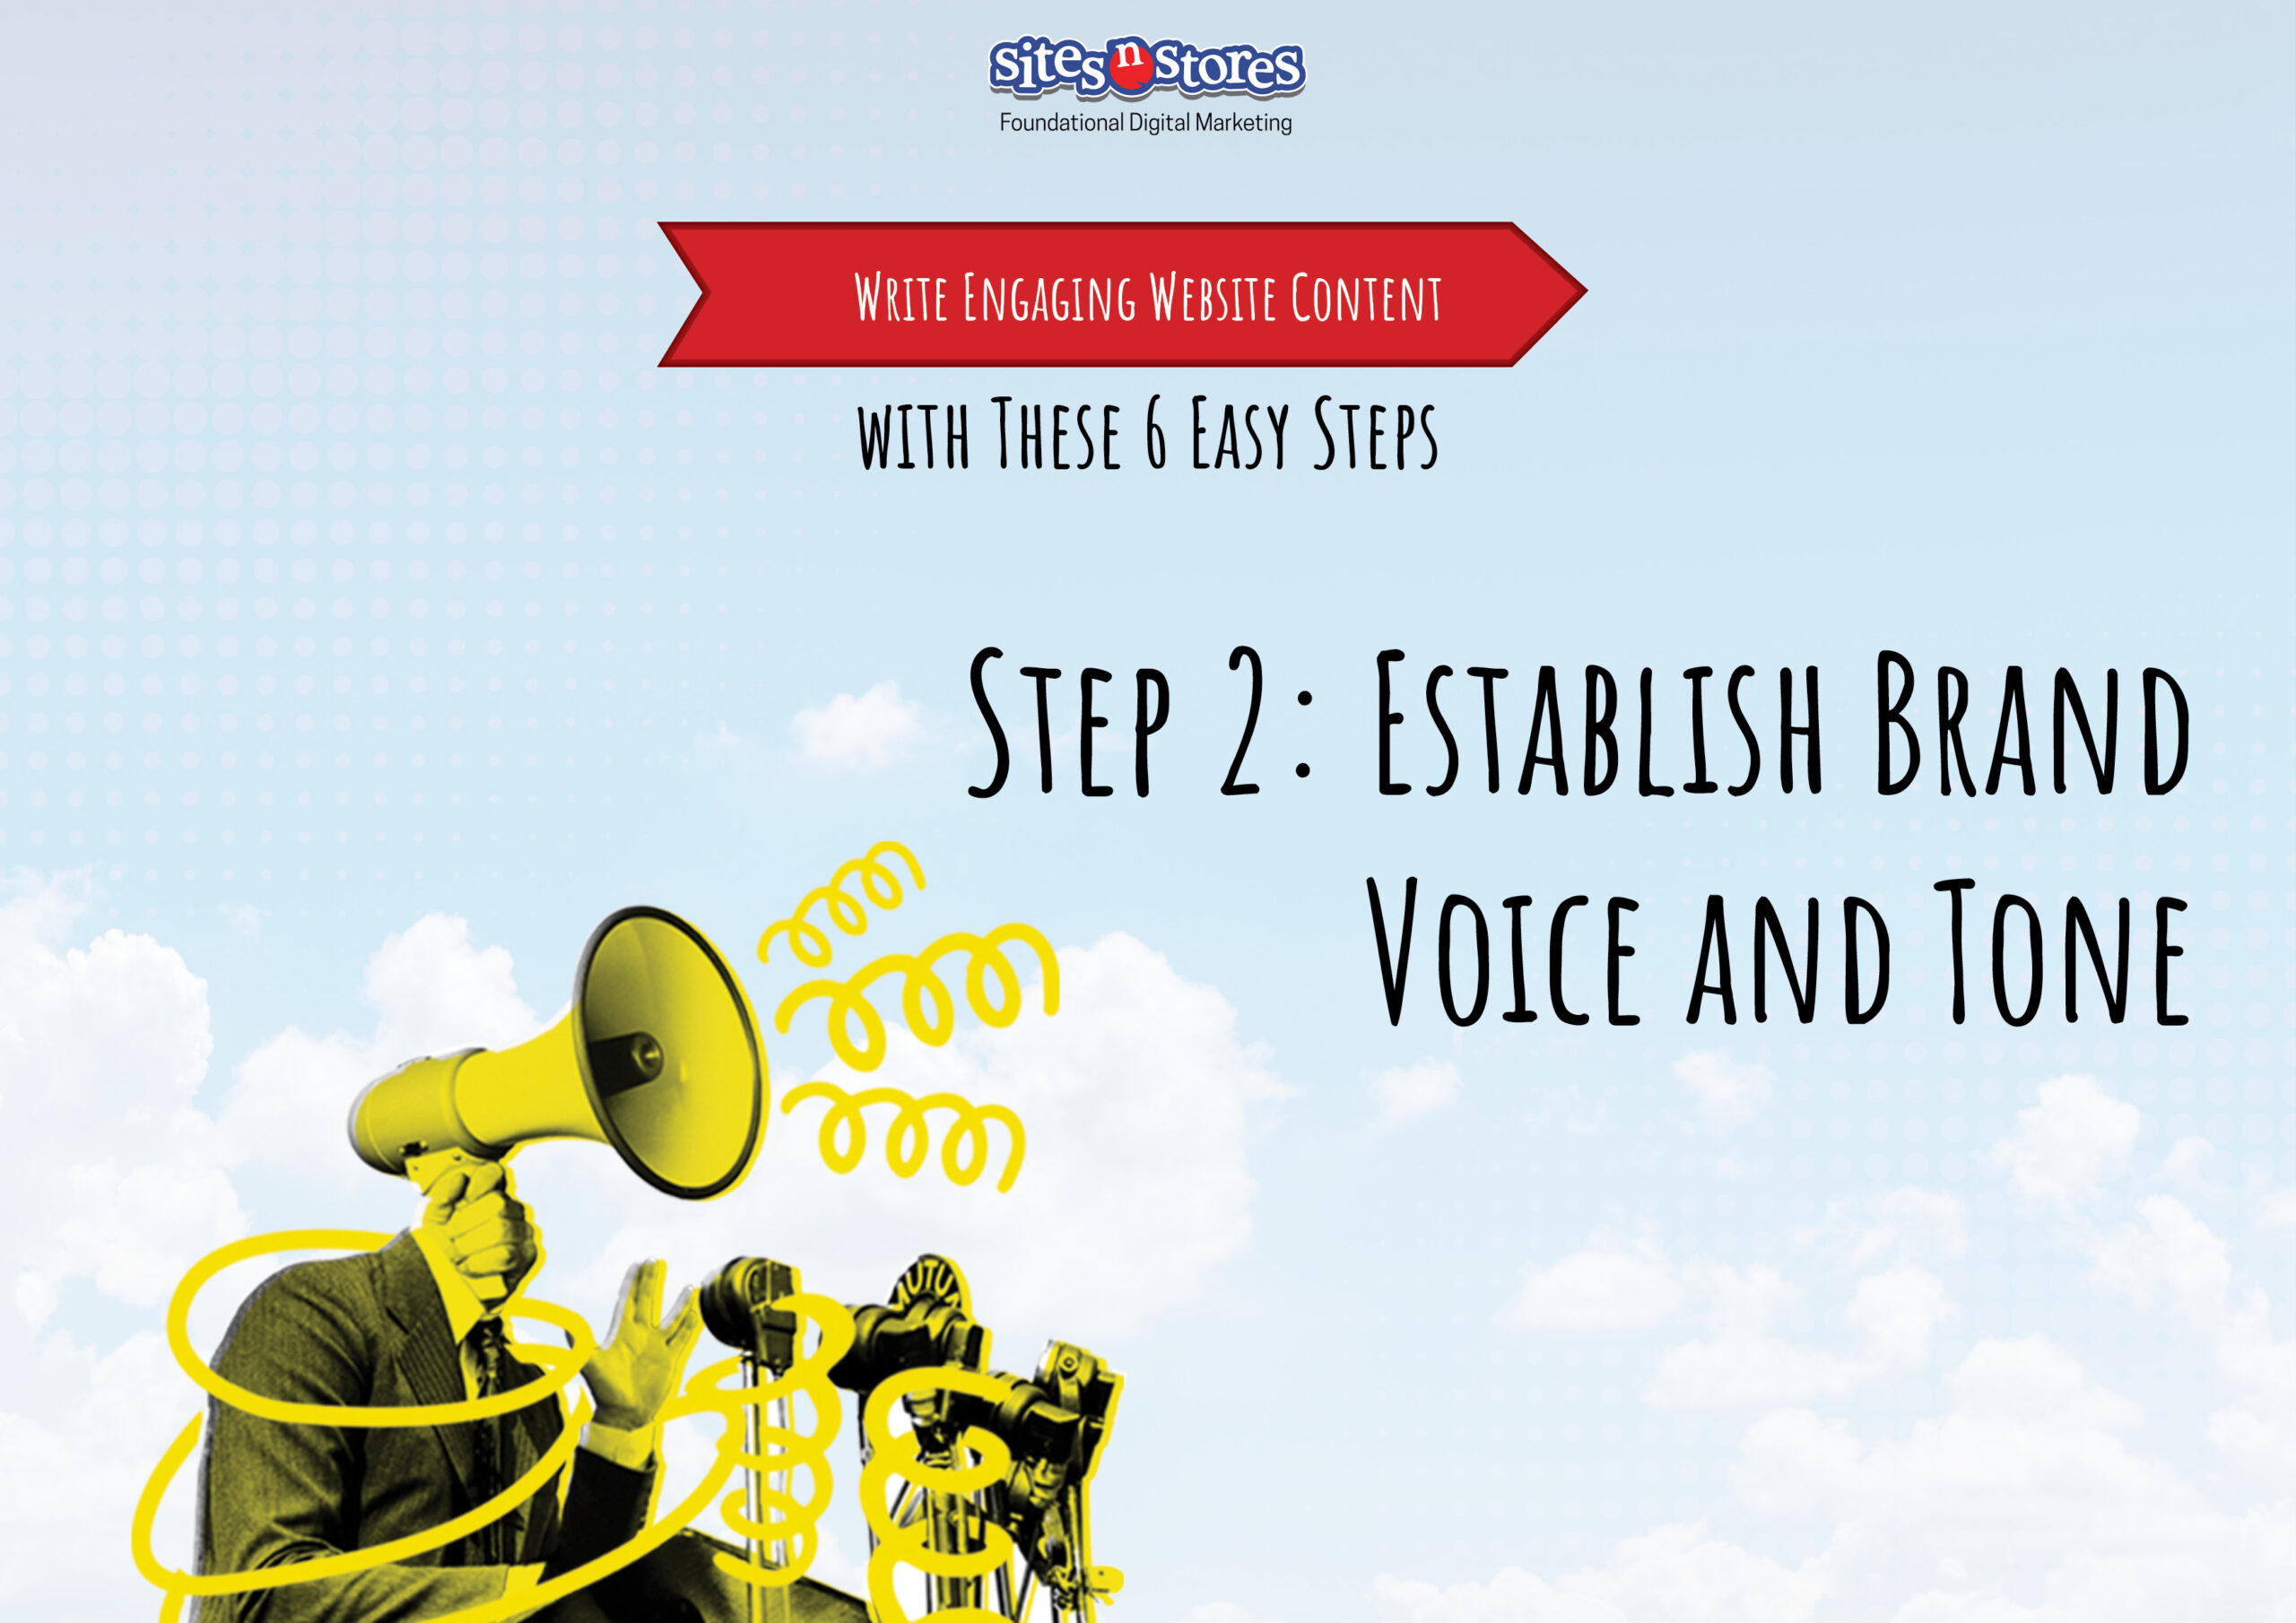 Step 2: Establish Brand Voice and Tone